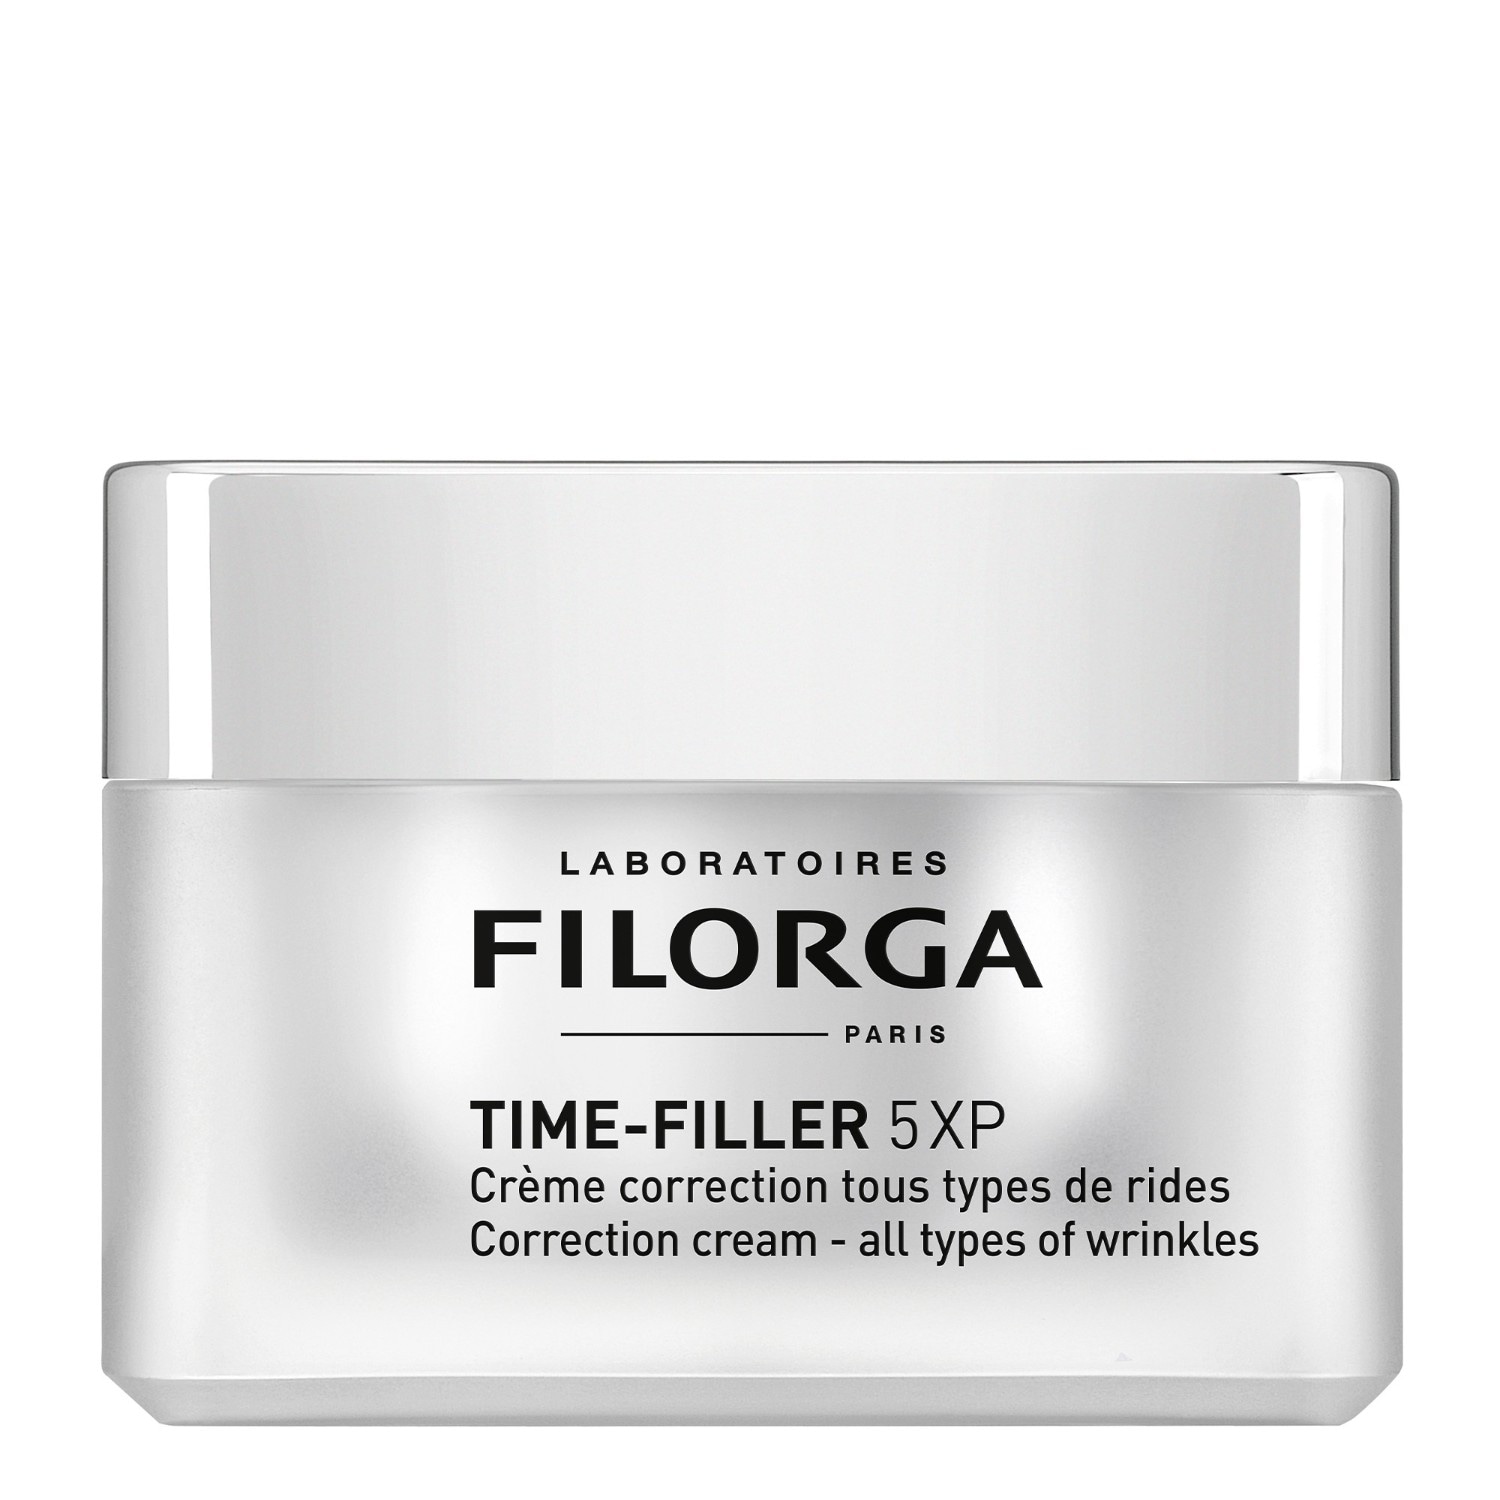 Filorga Time Filler 5xp cream comprehensively corrective anti-wrinkle day cream